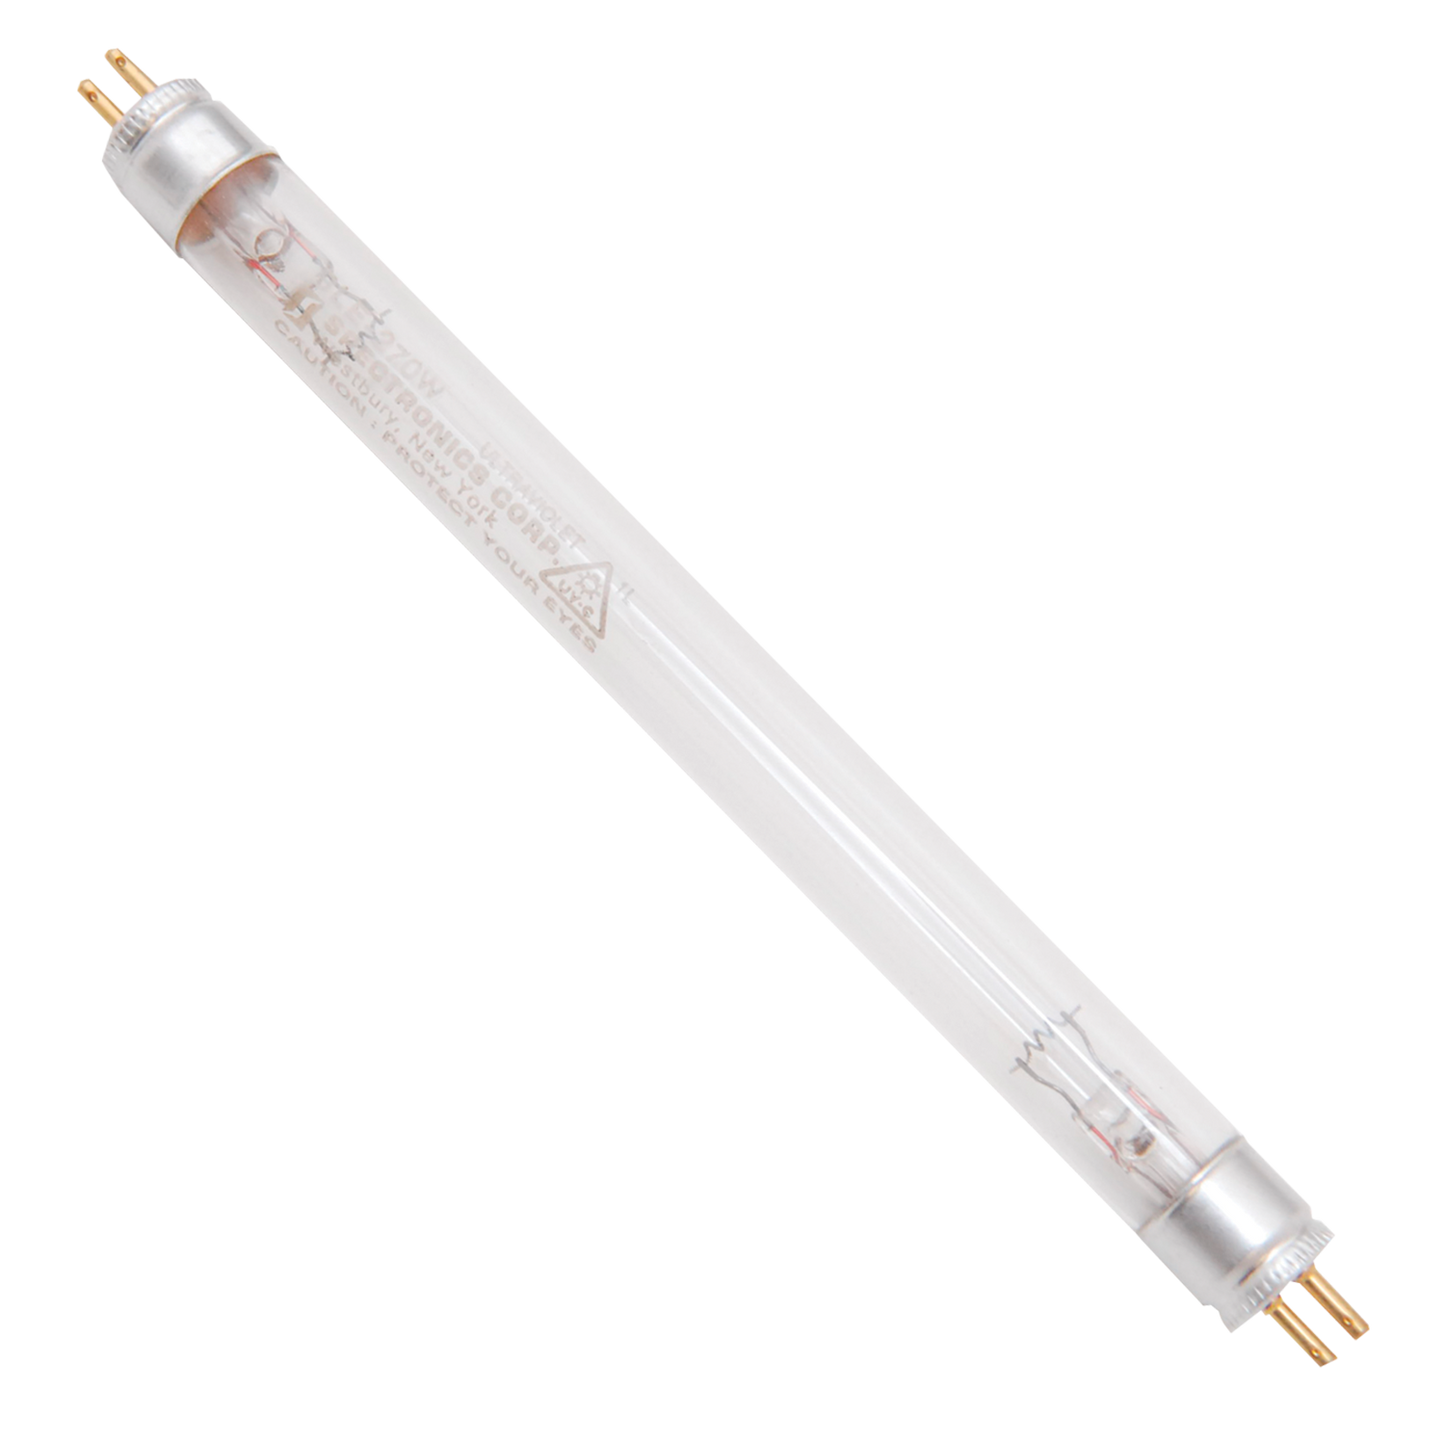 Cole-Parmer 6-Watt Uv Lamp With 365nm And 254nm Wavelength Light Tubes, 230VAC